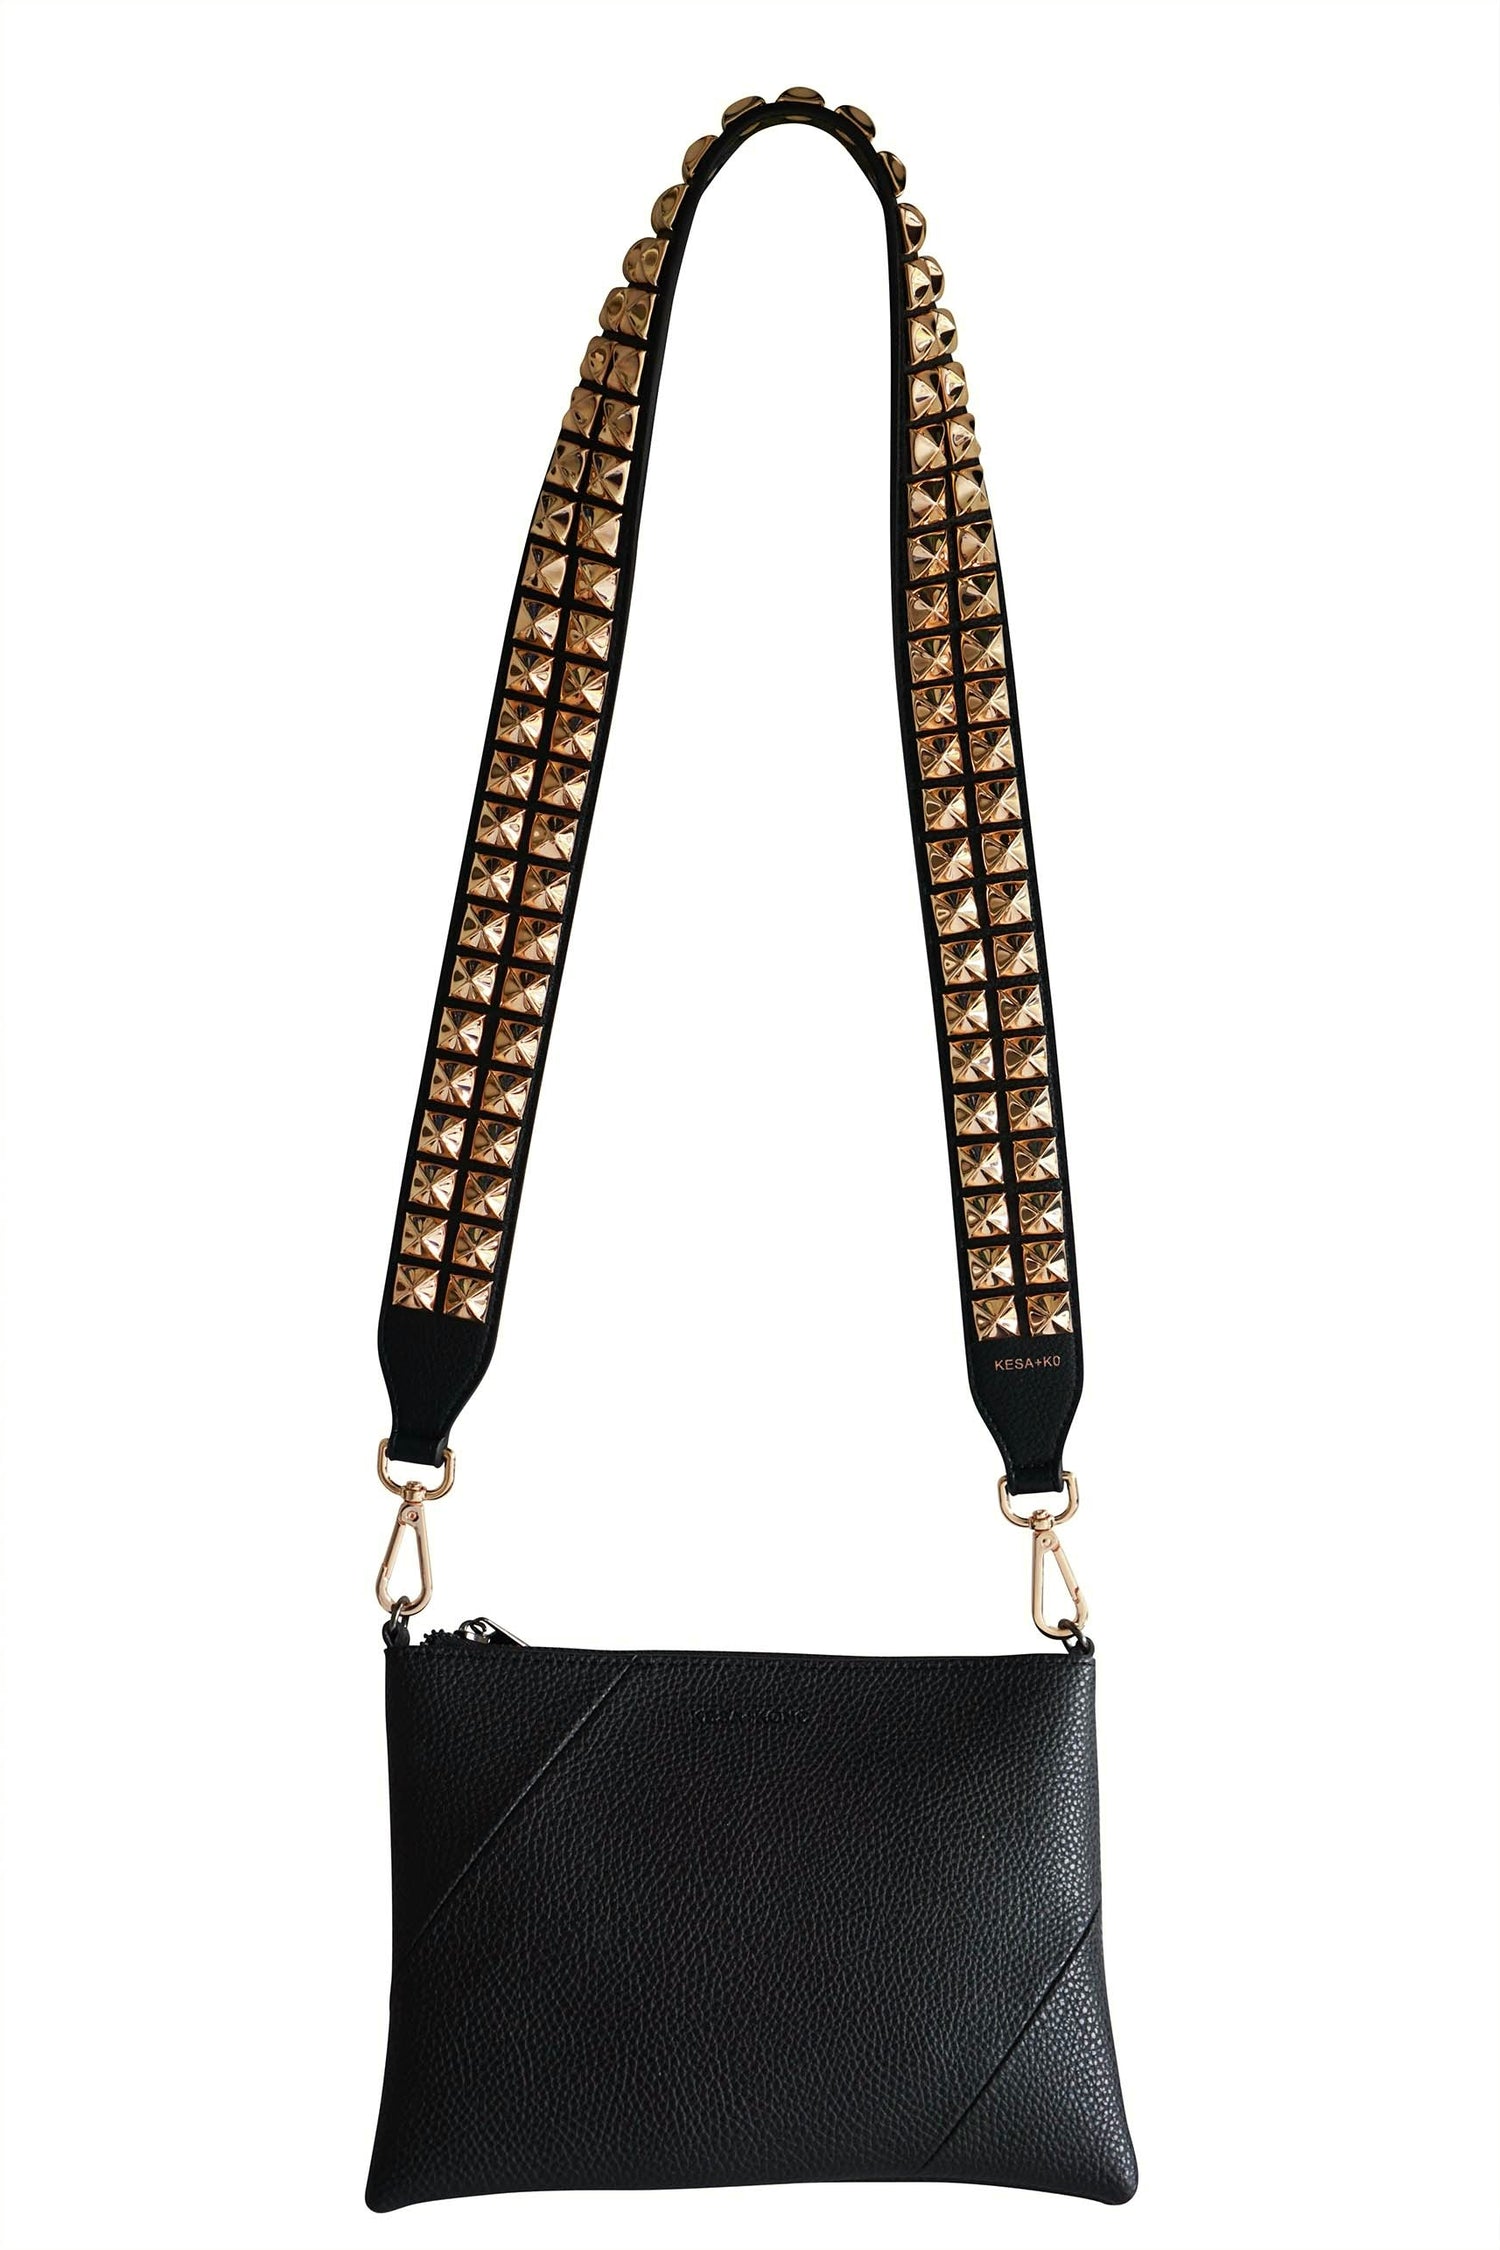 Warm Gold studded bag strap - Dalia Long length